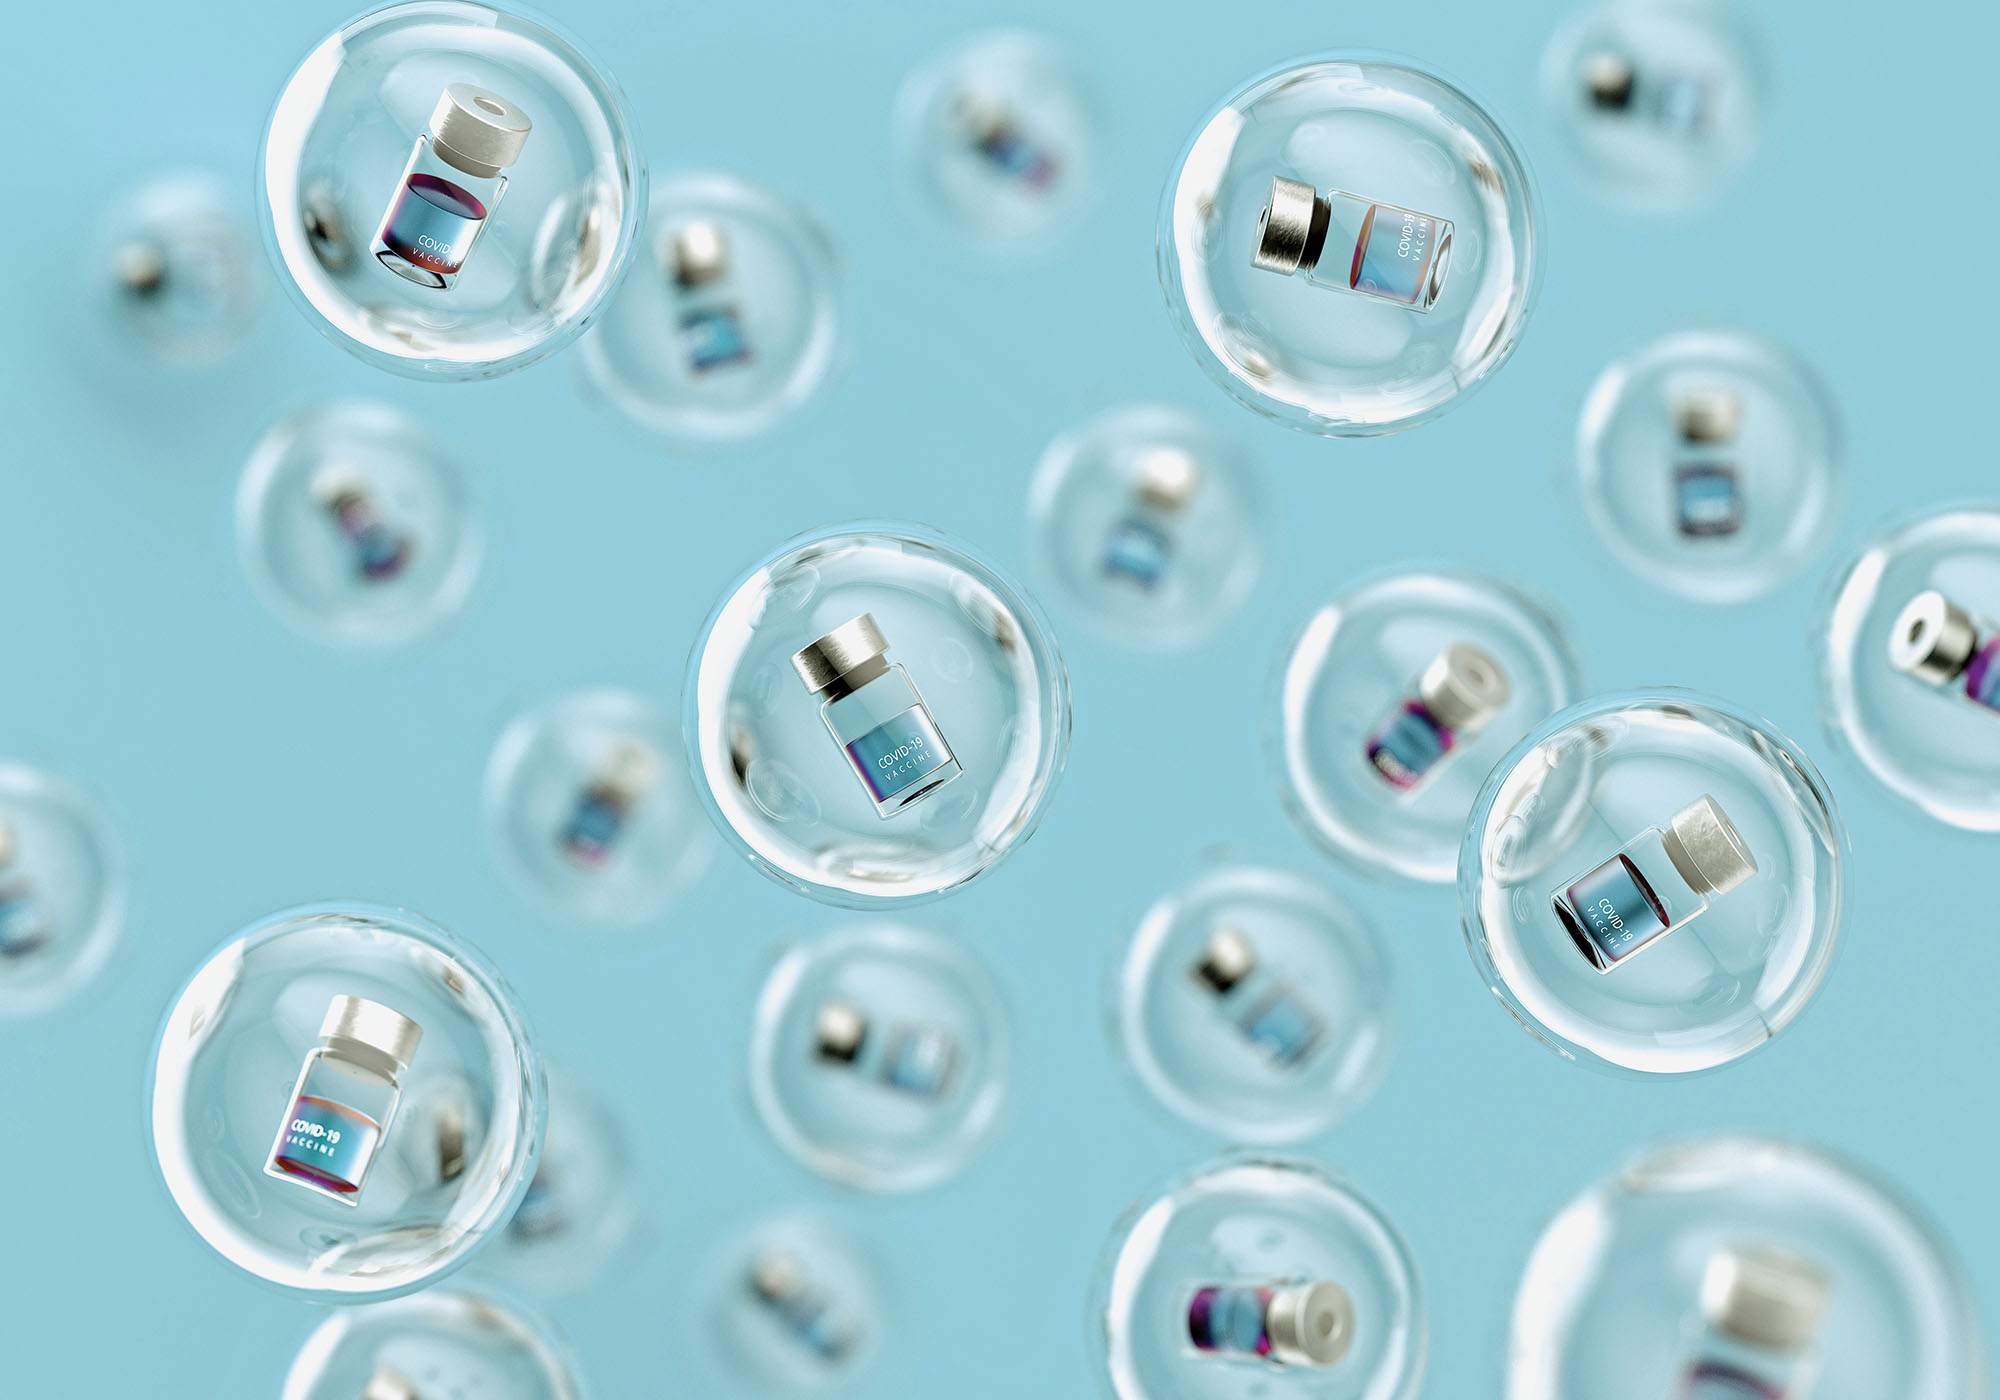 Digital generated image of COVID-19 vaccine bottles inside glass spheres levitating against light blue background.